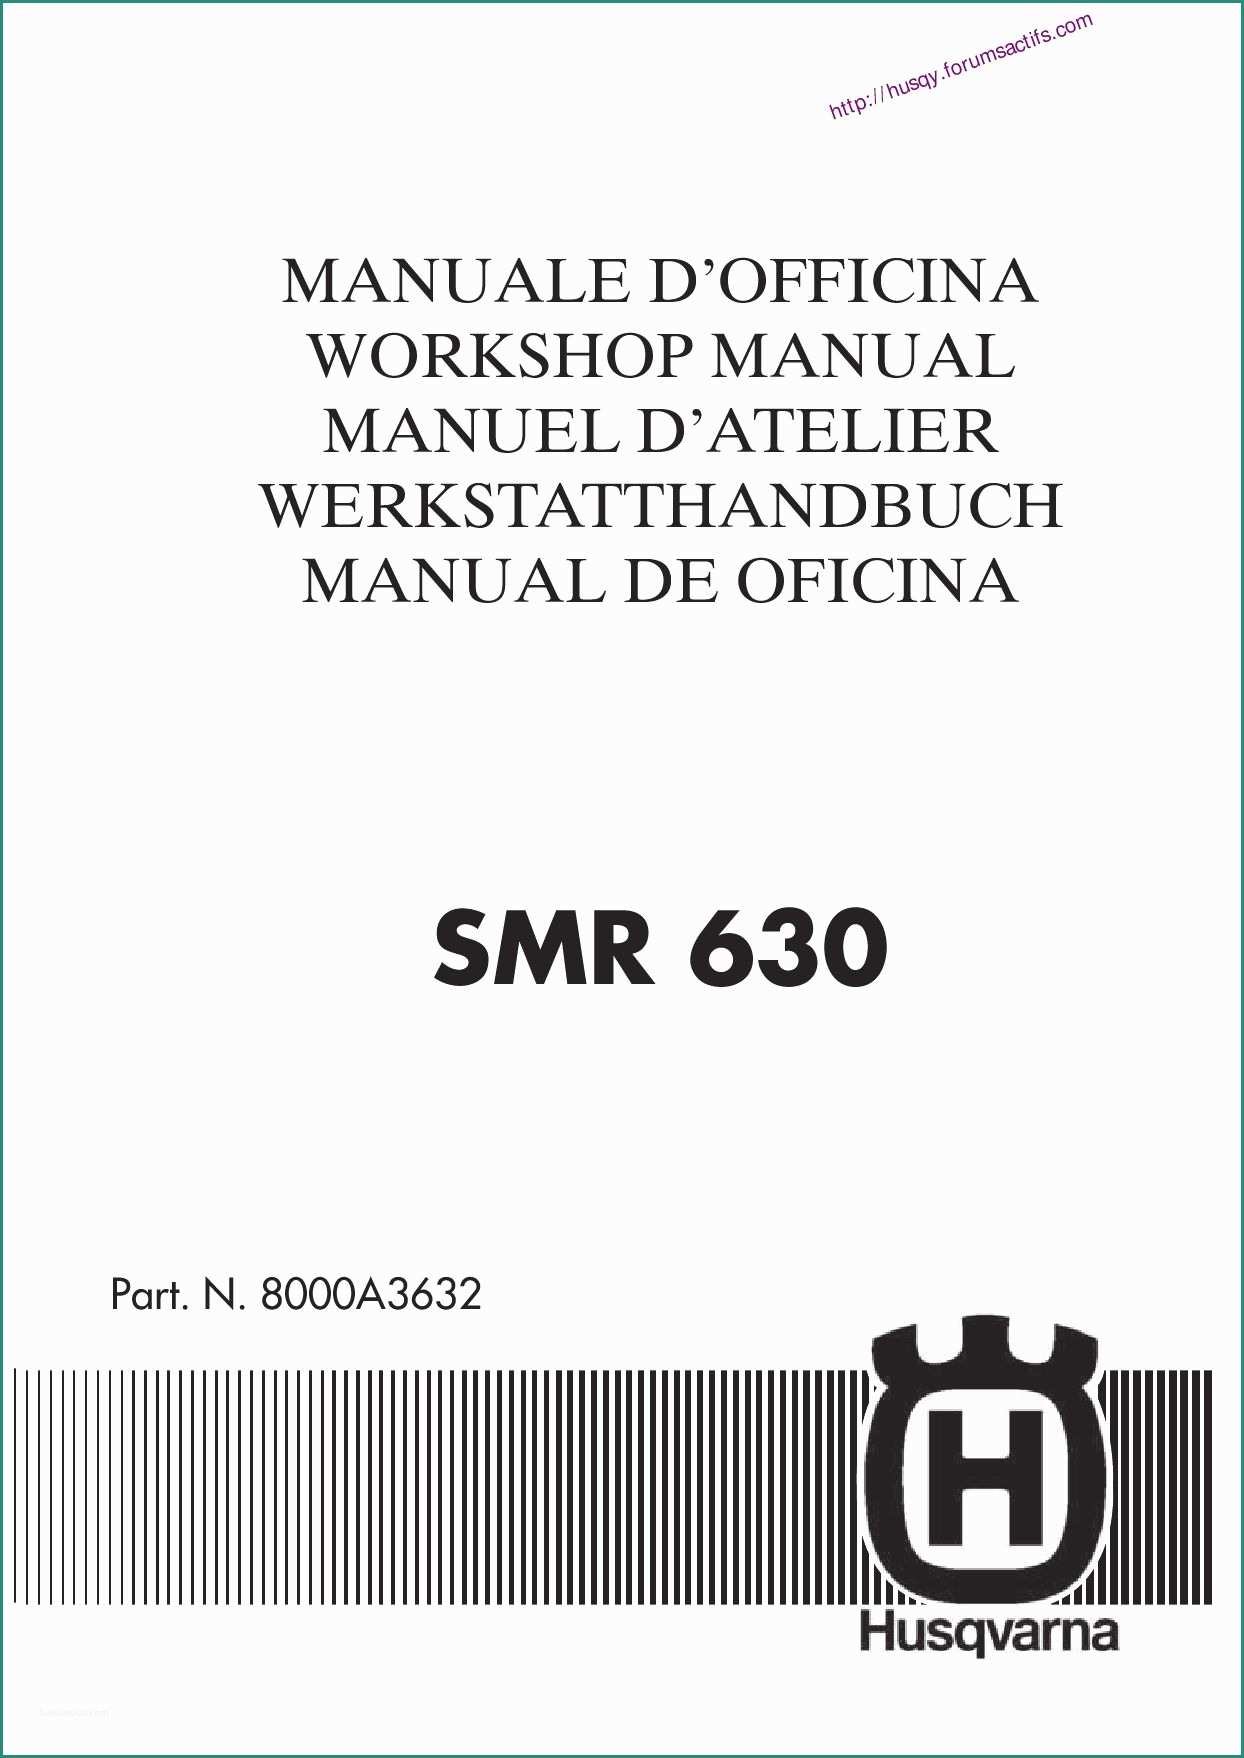 Pressa Idraulica Manuale Usata E 2004 Wsm Smr630 1 by Husq issuu